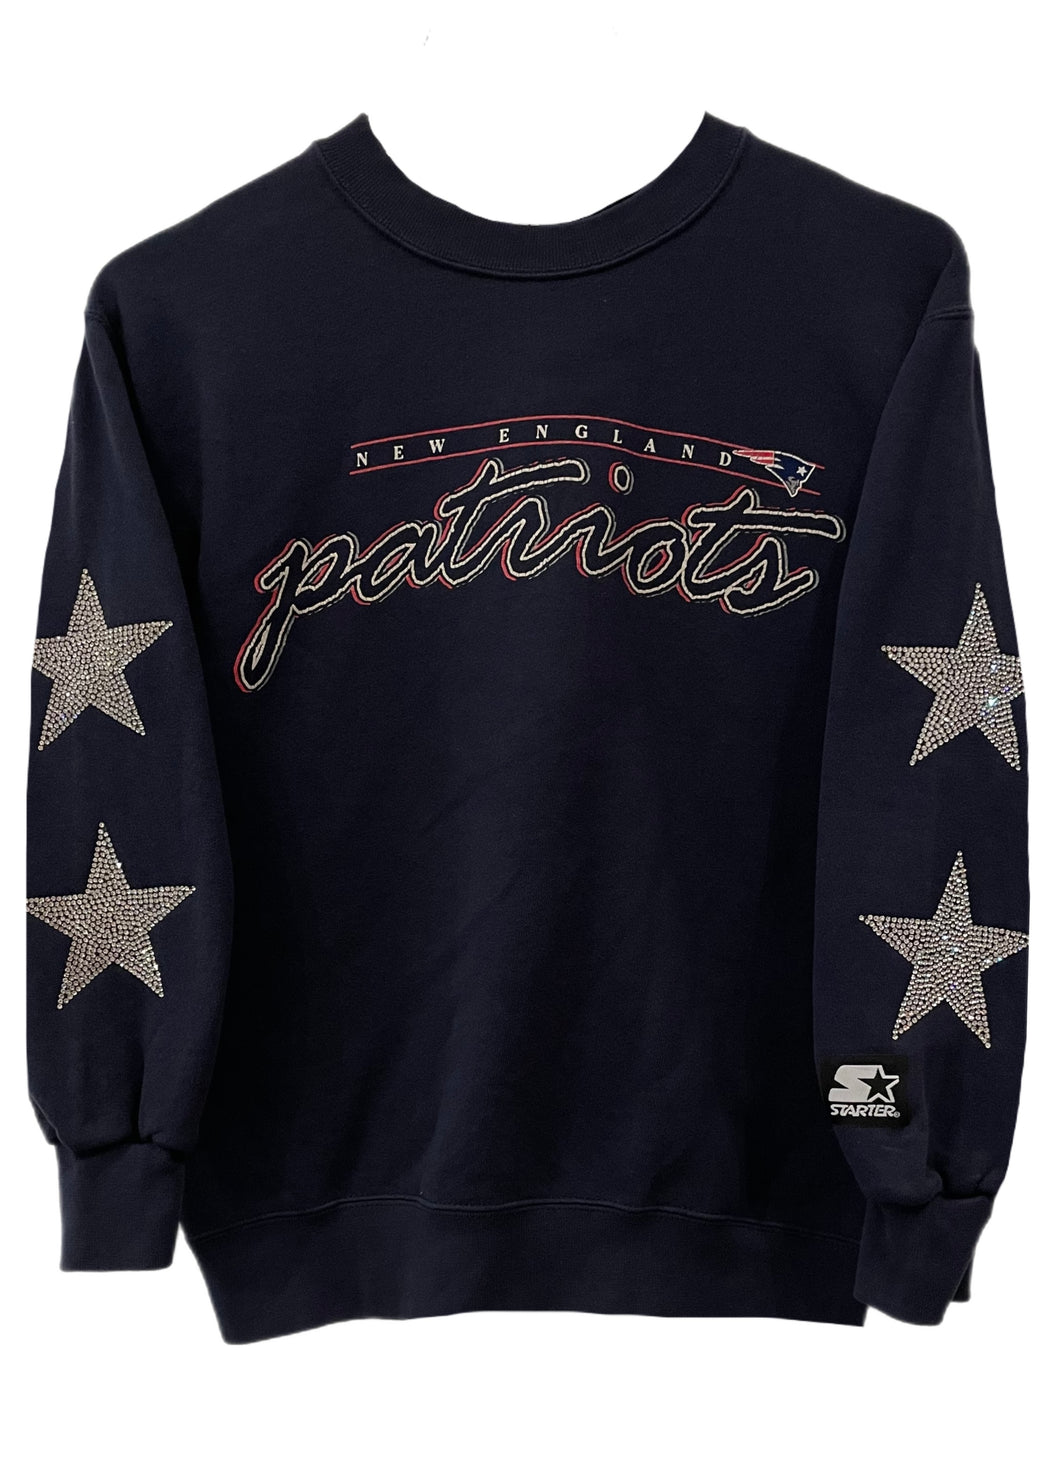 New England Patriots, NFL One of a KIND Vintage Kids Sweatshirt with Crystal Star Design